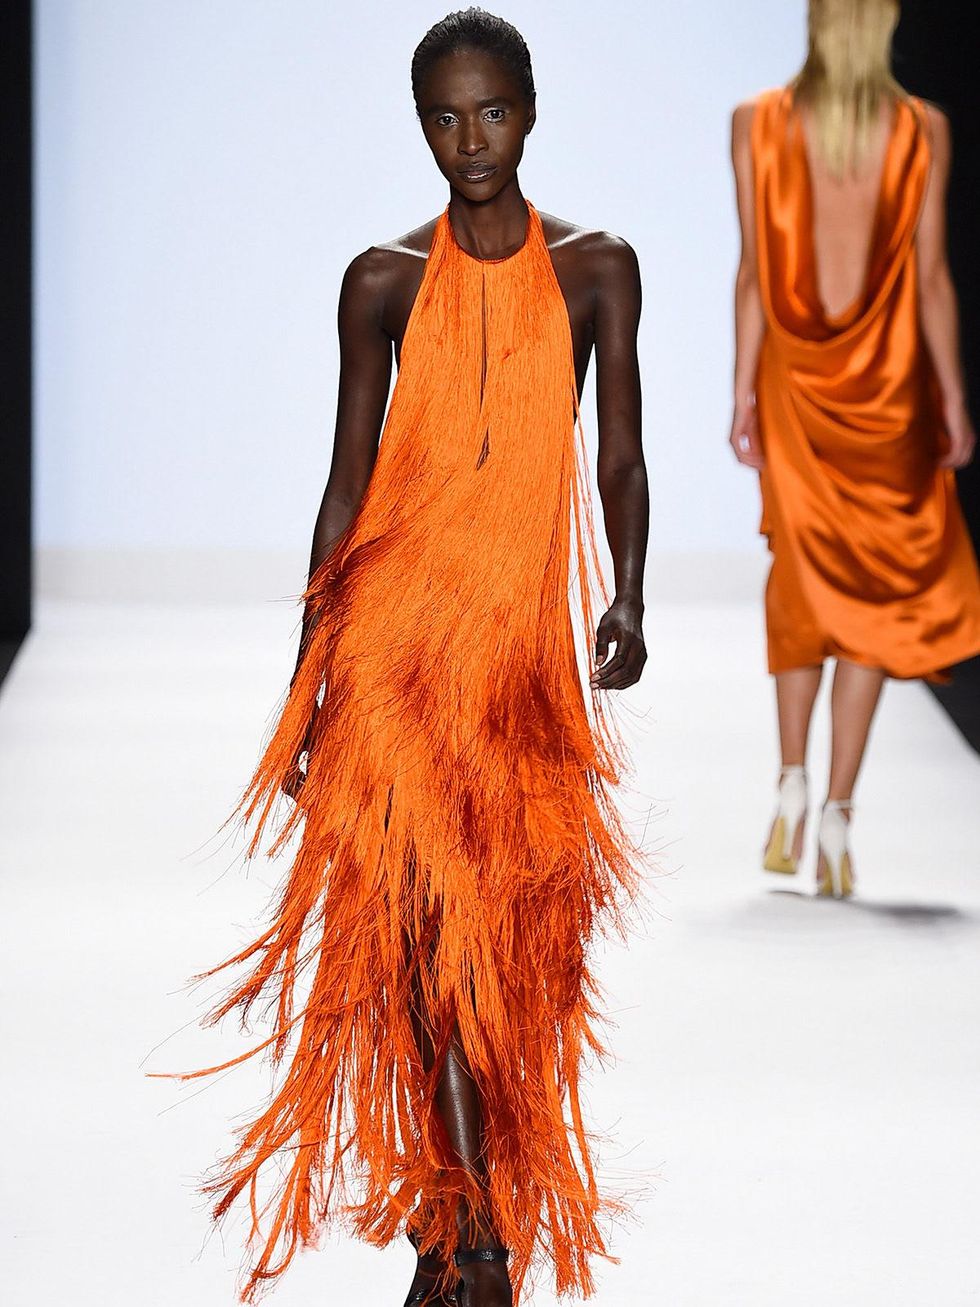 Fashion Week spring 2015 Project Runway model in orange fringe dress